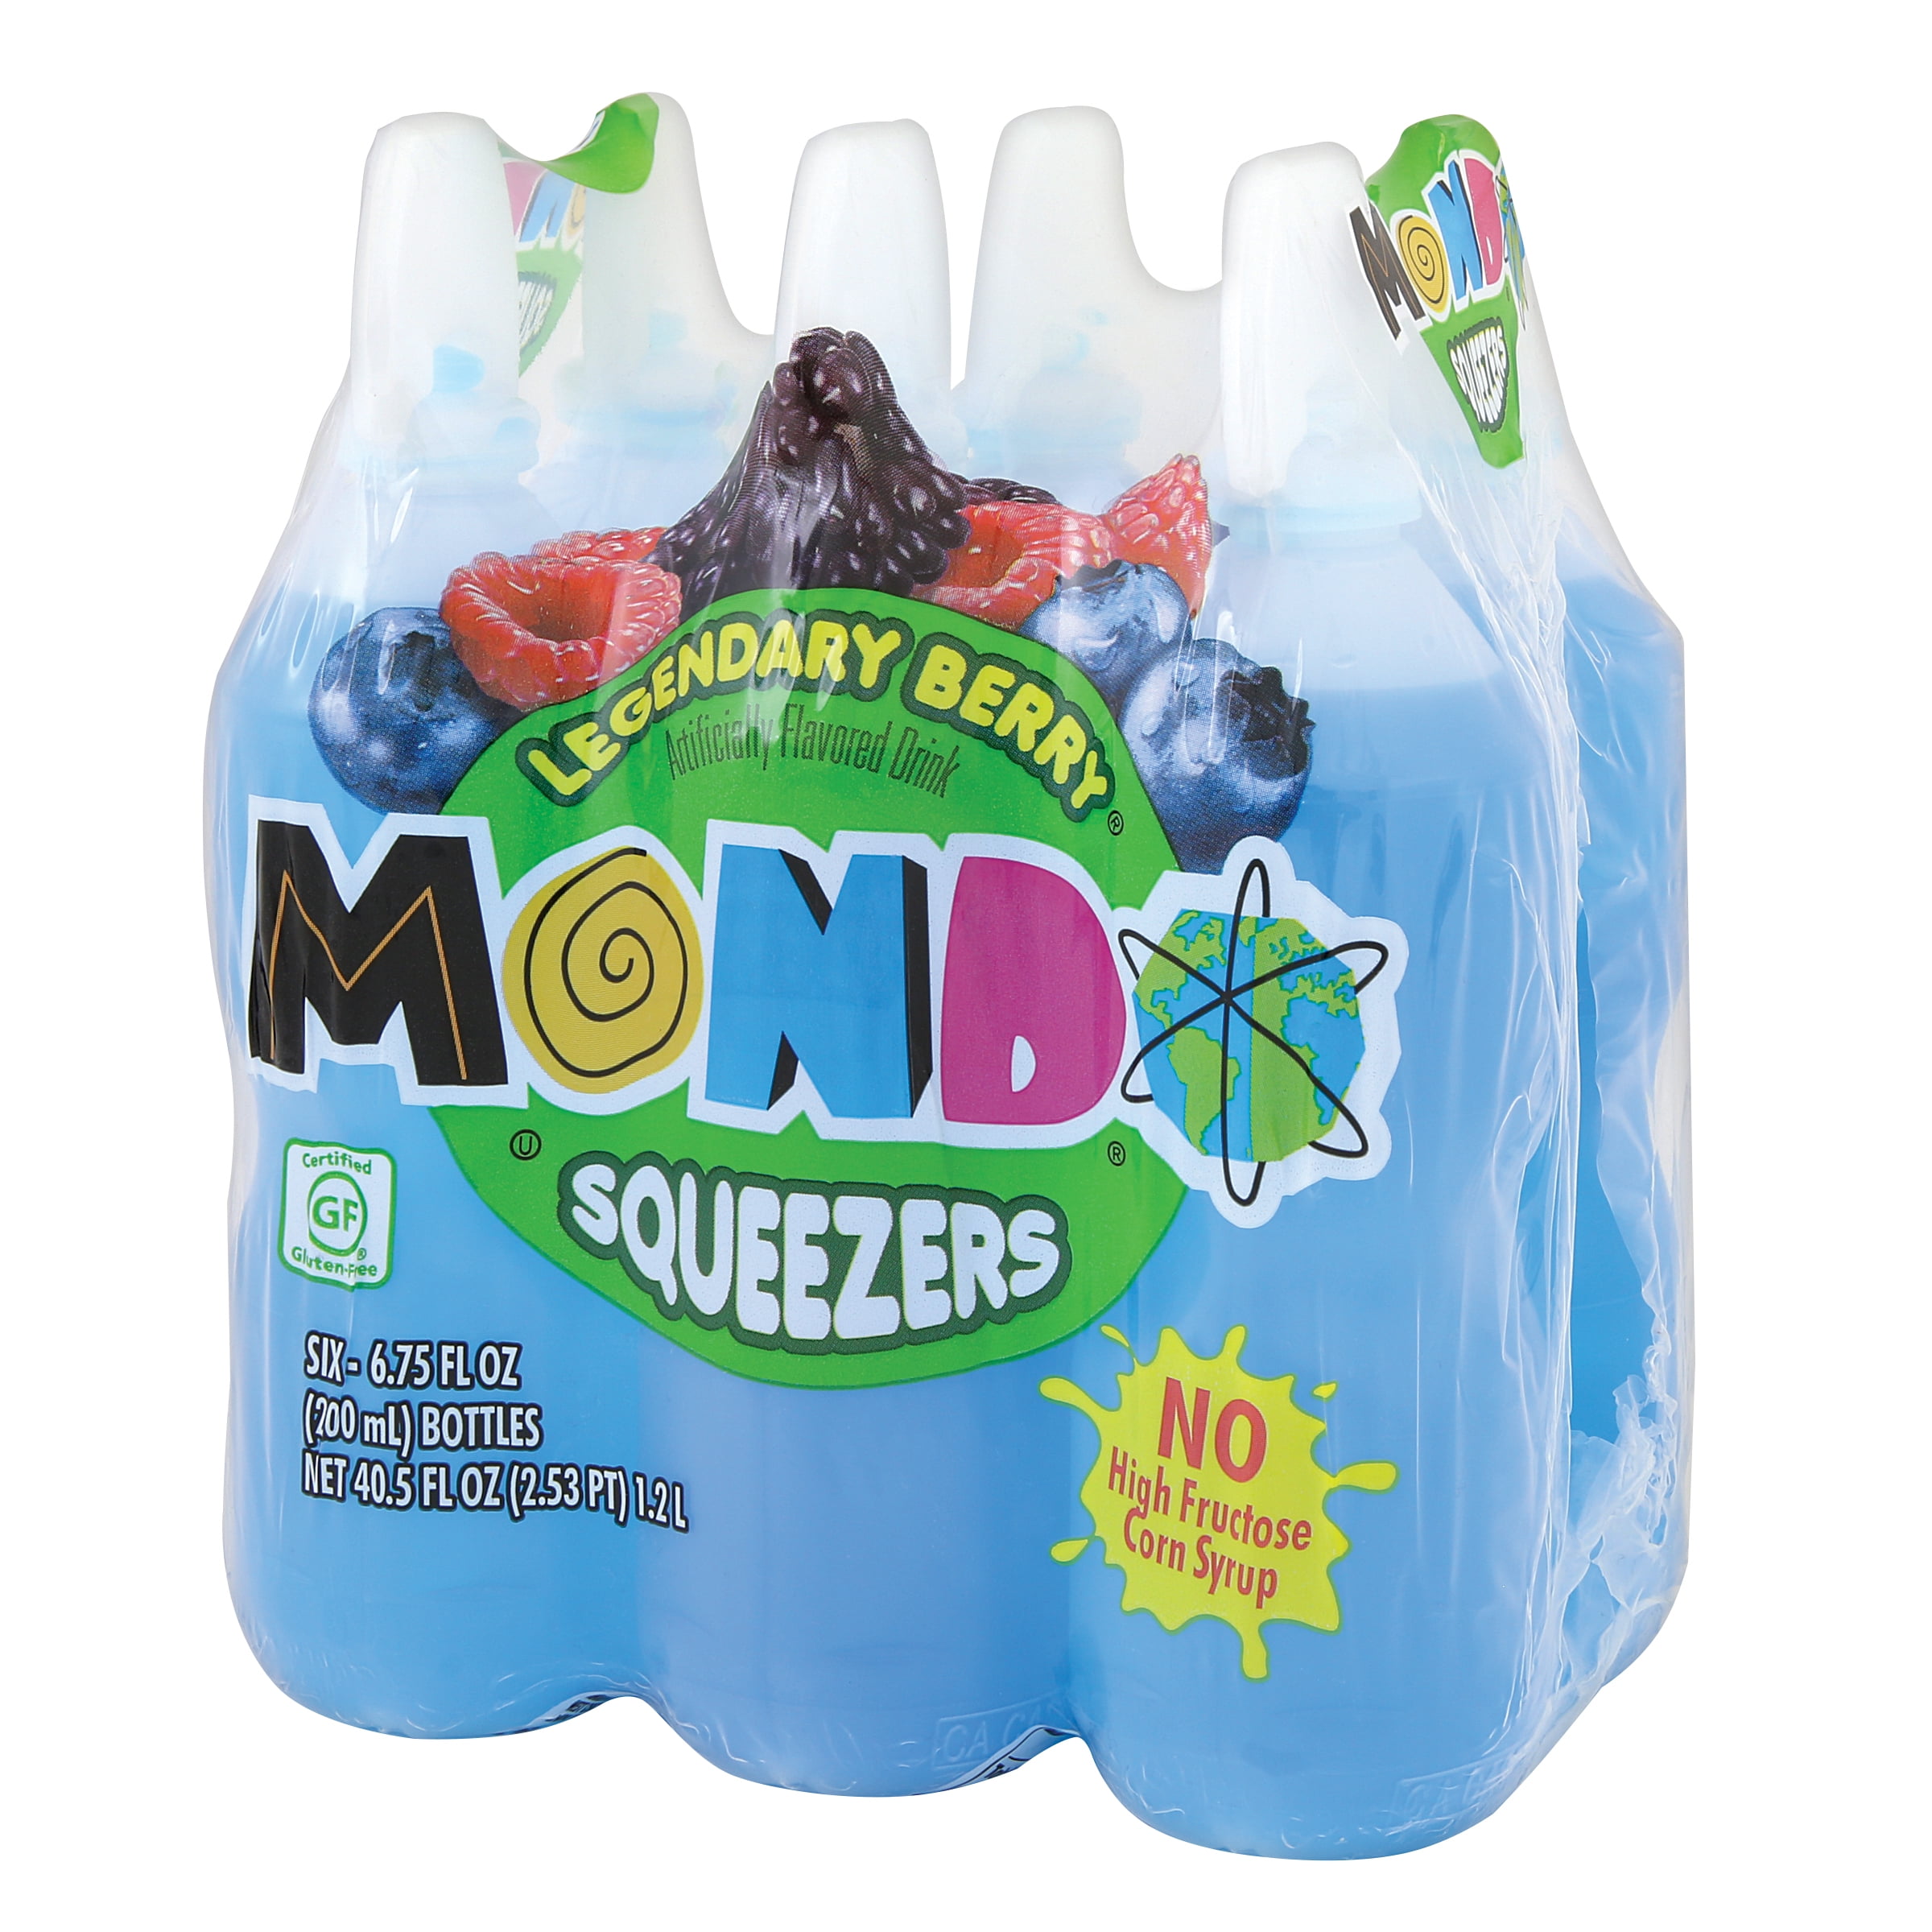 MONDO Fruit Squeezers, Legendary Berry, 6.75 Fl Oz, 6 Count